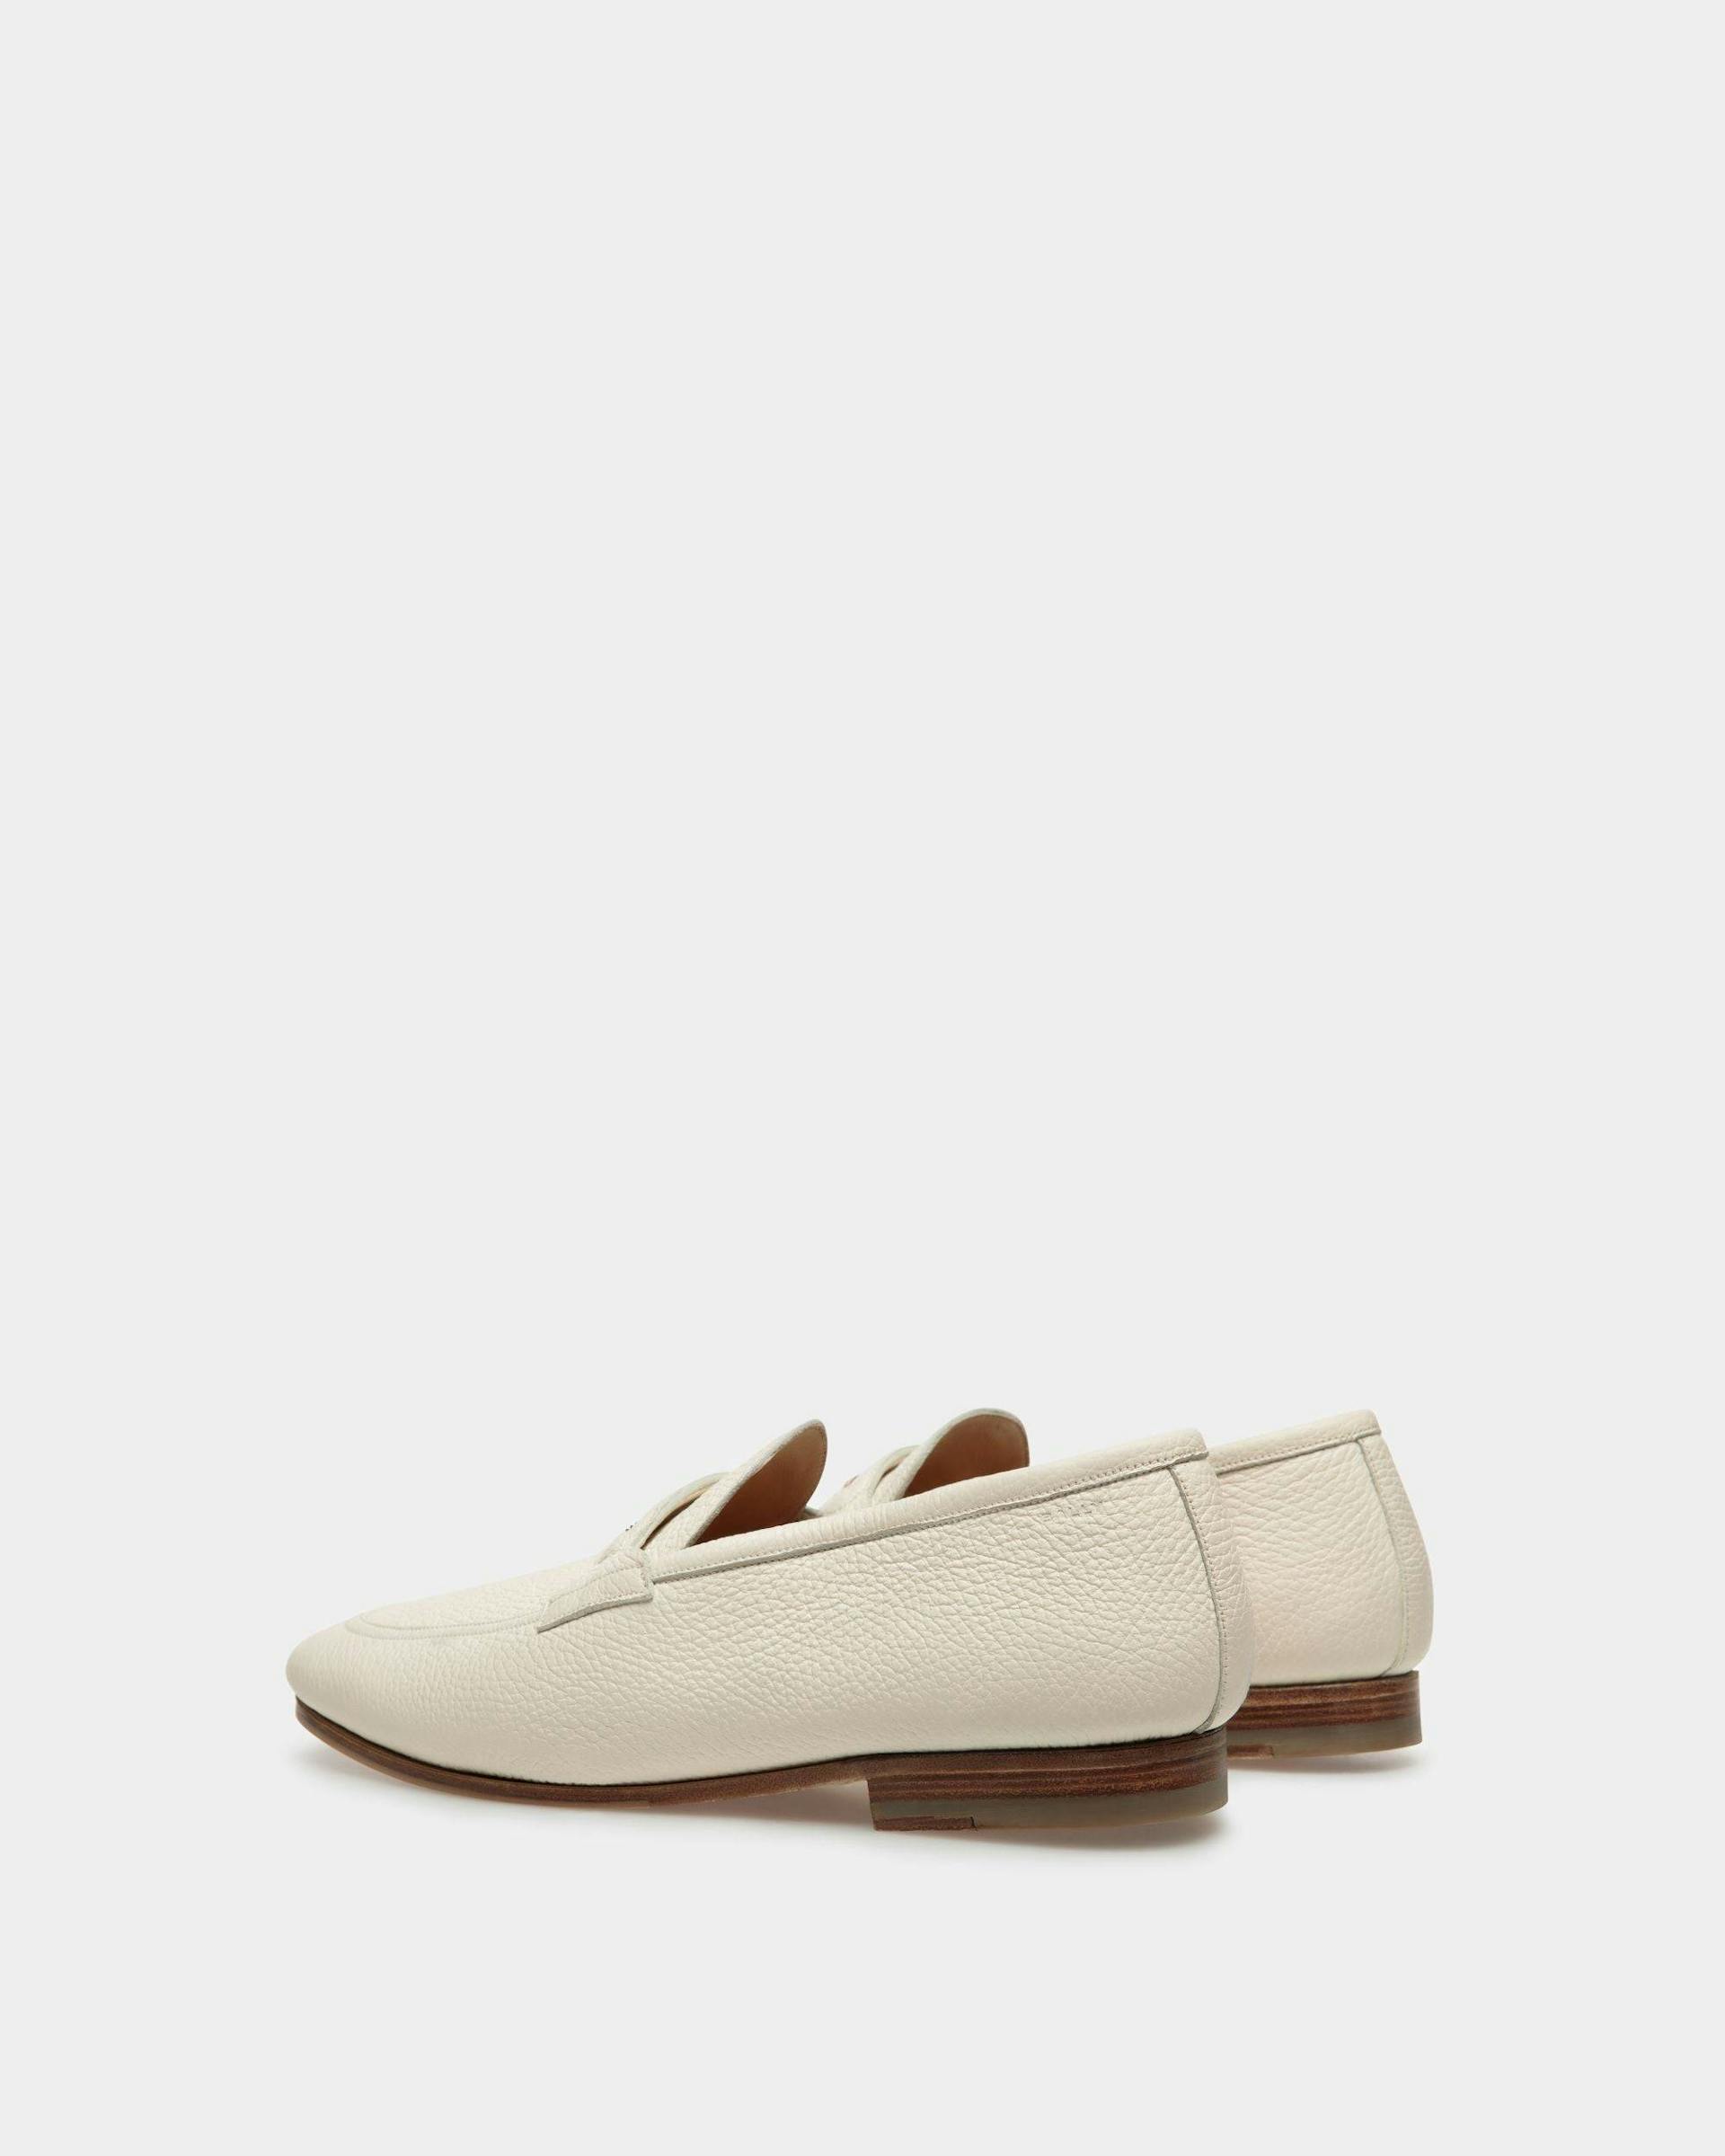 Men's Pesek Loafers In White Leather | Bally | Still Life 3/4 Back